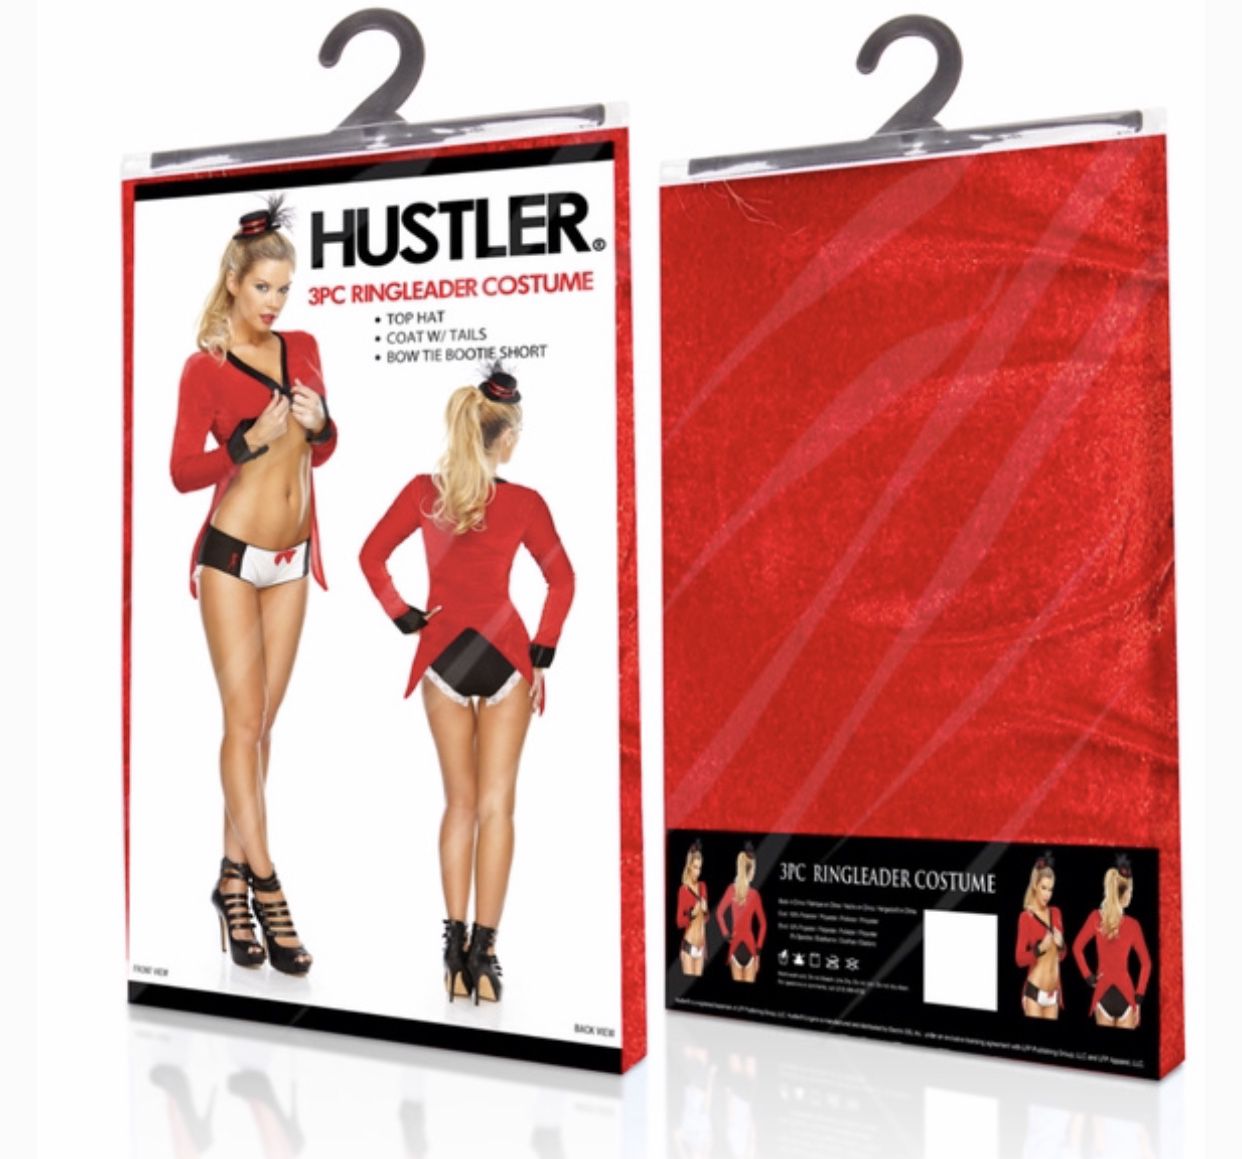 Hustler Sexy Ringleader Costume Halloween Hat 3 Pc Red White Black S/M New